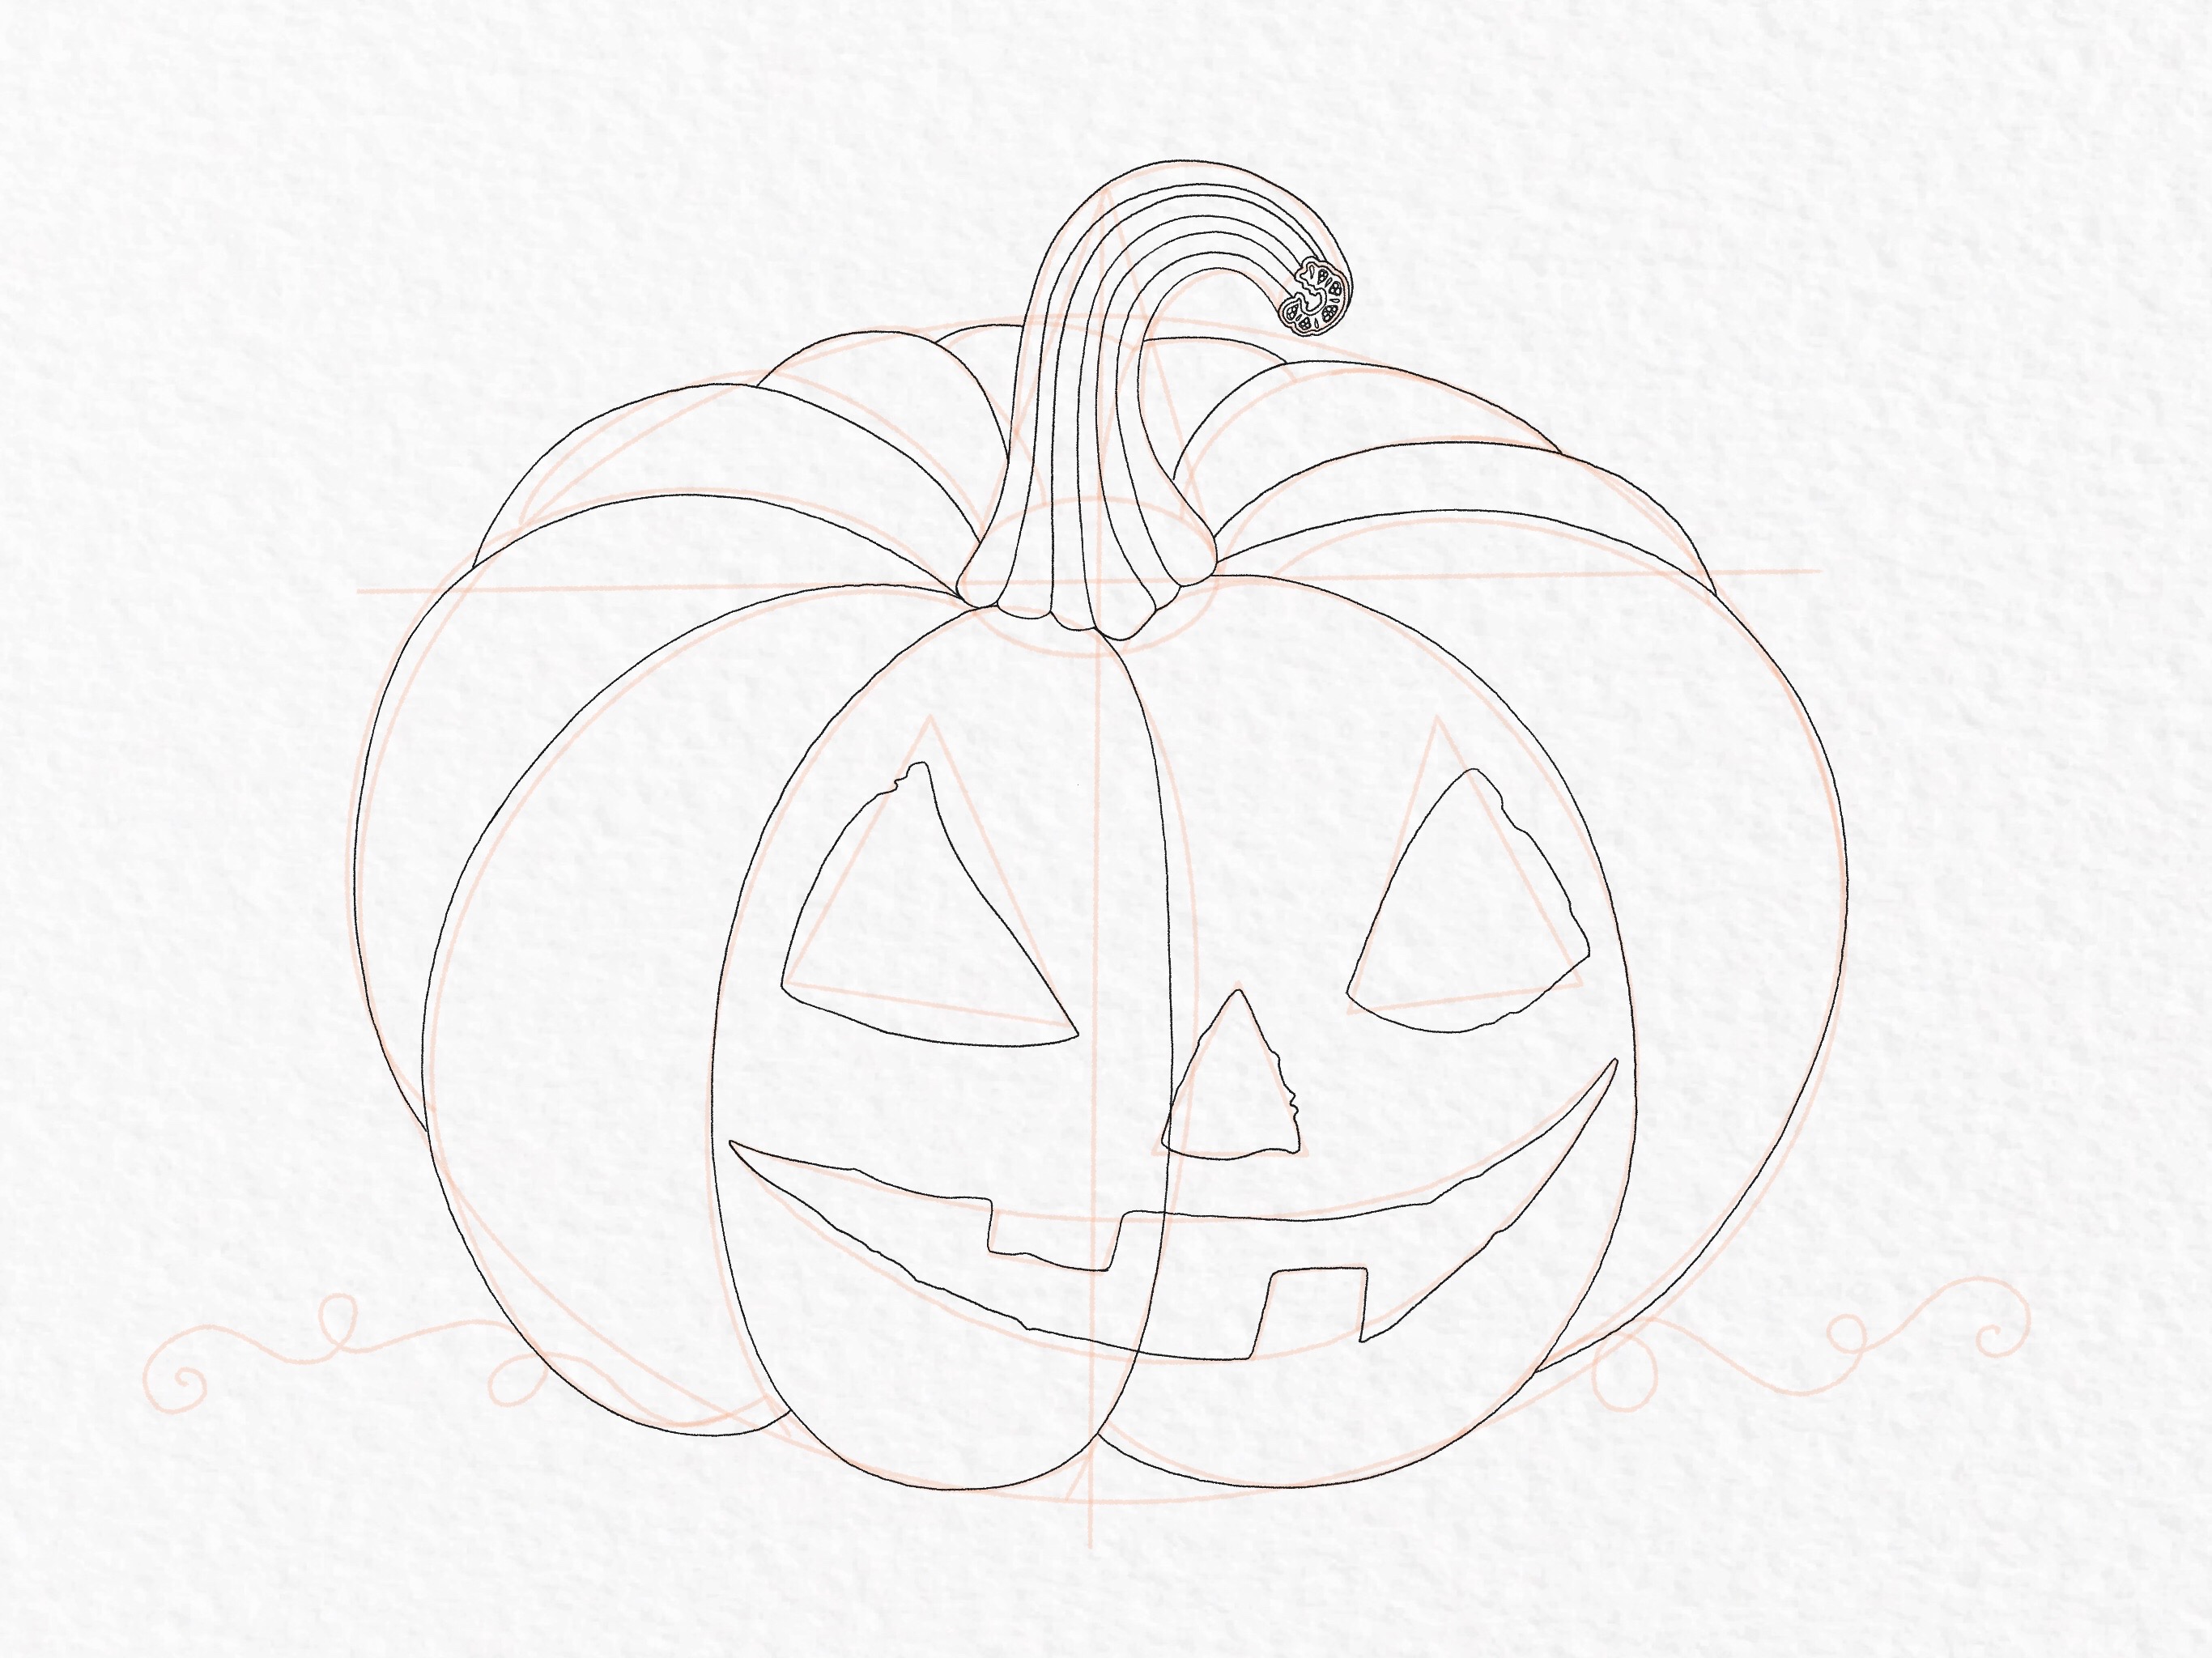 Pumpkin drawing tutorial, step 25